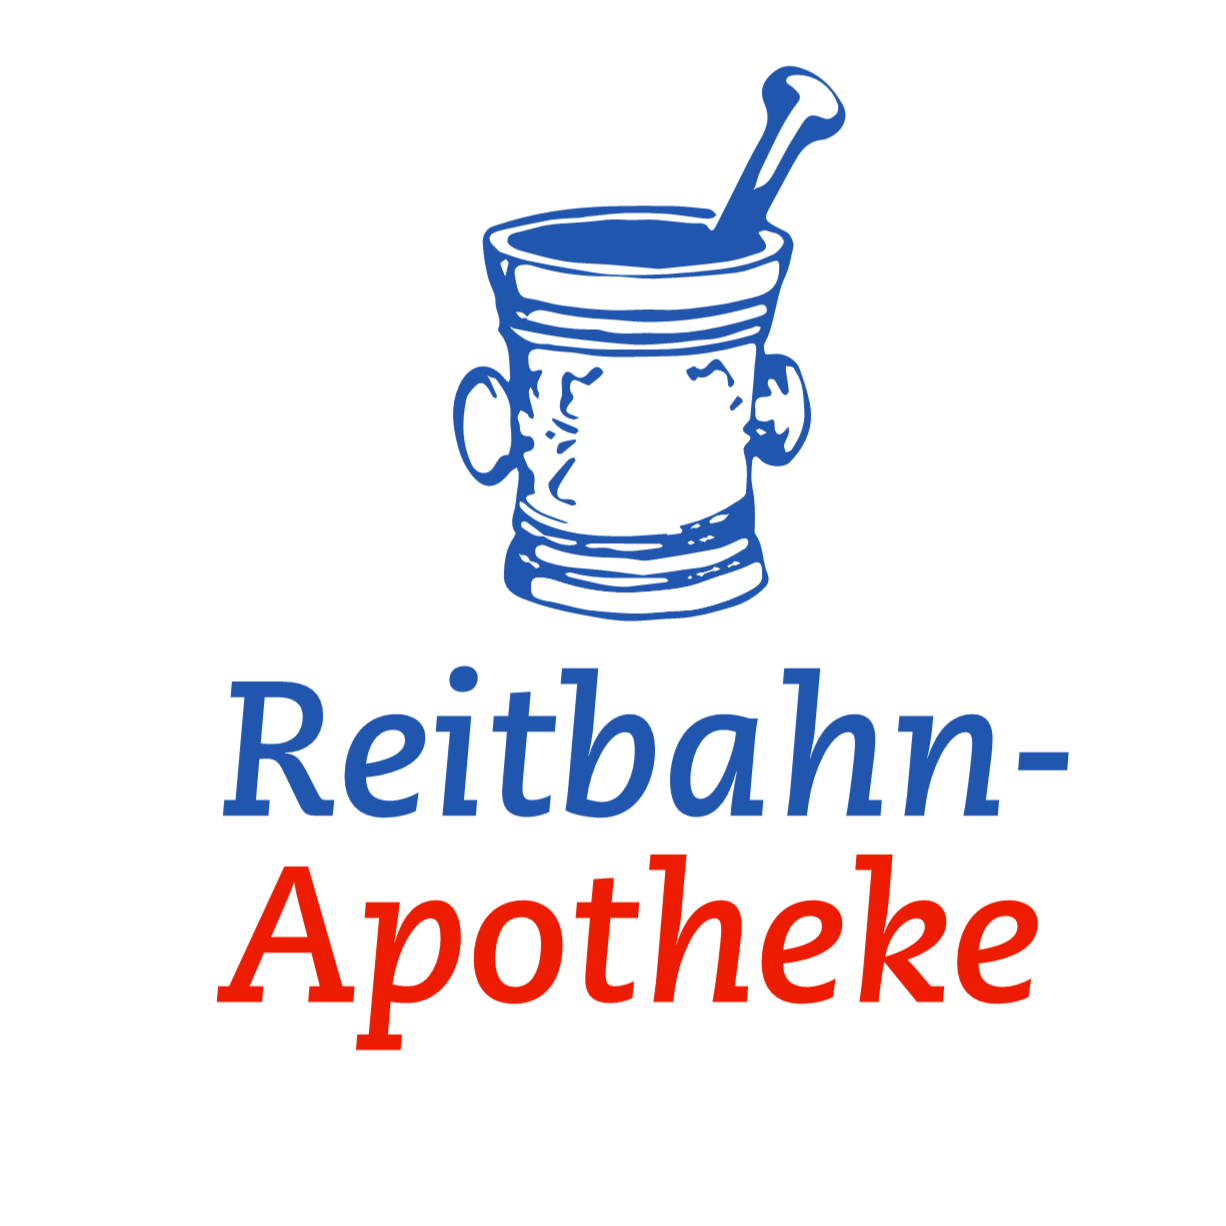 Reitbahn-Apotheke Inh. Raffael Oidtmann in Neubrandenburg - Logo